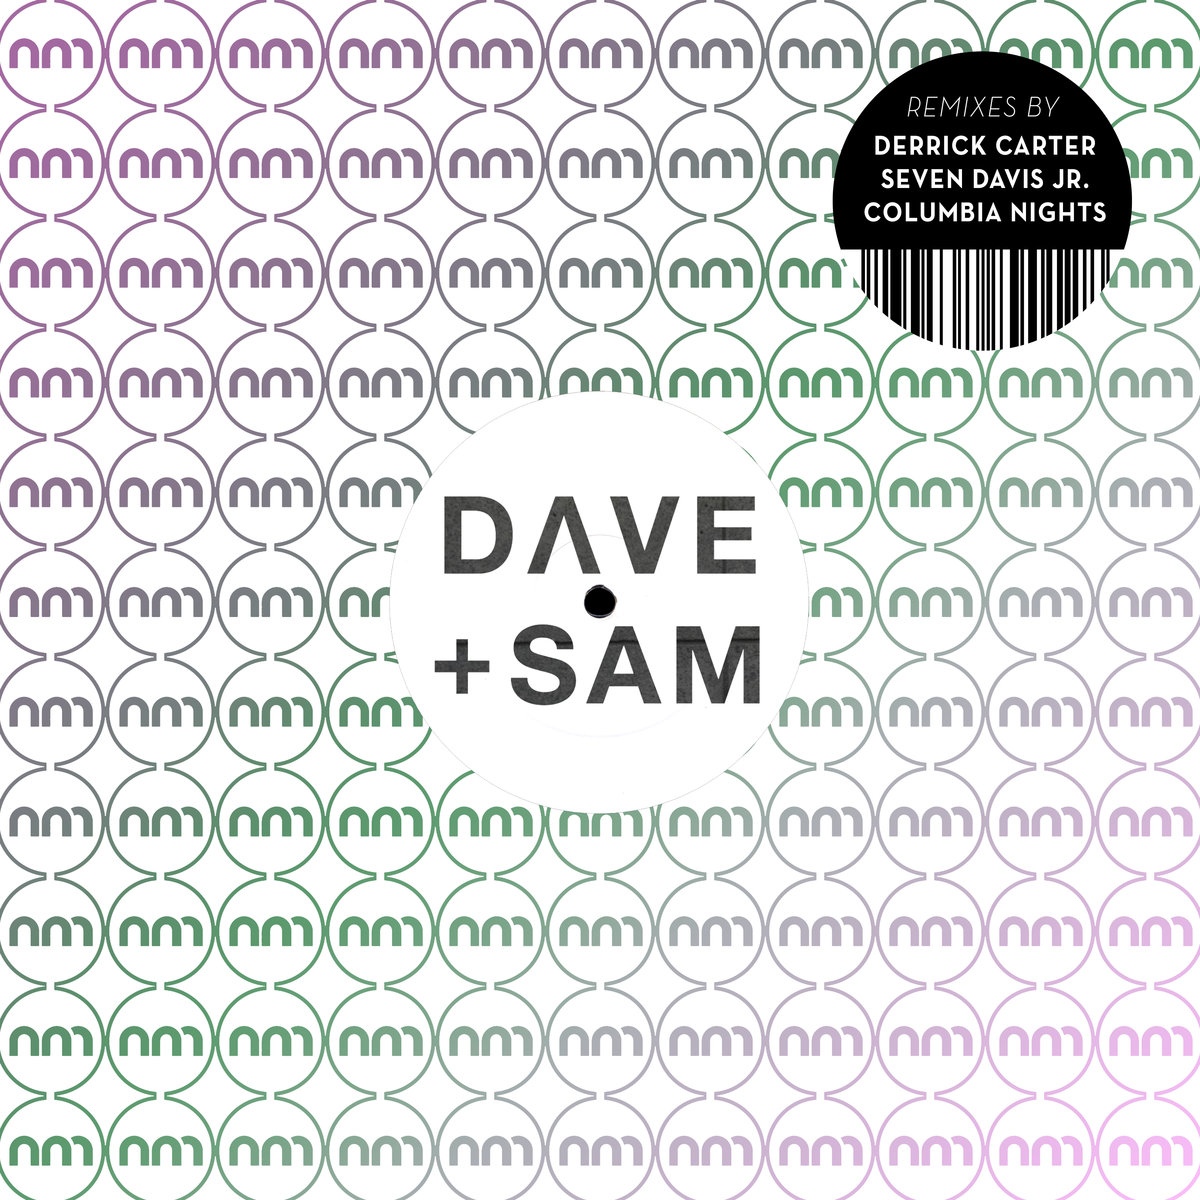 Dave + Sam/YOU DA SHIT REMIXES EP 12